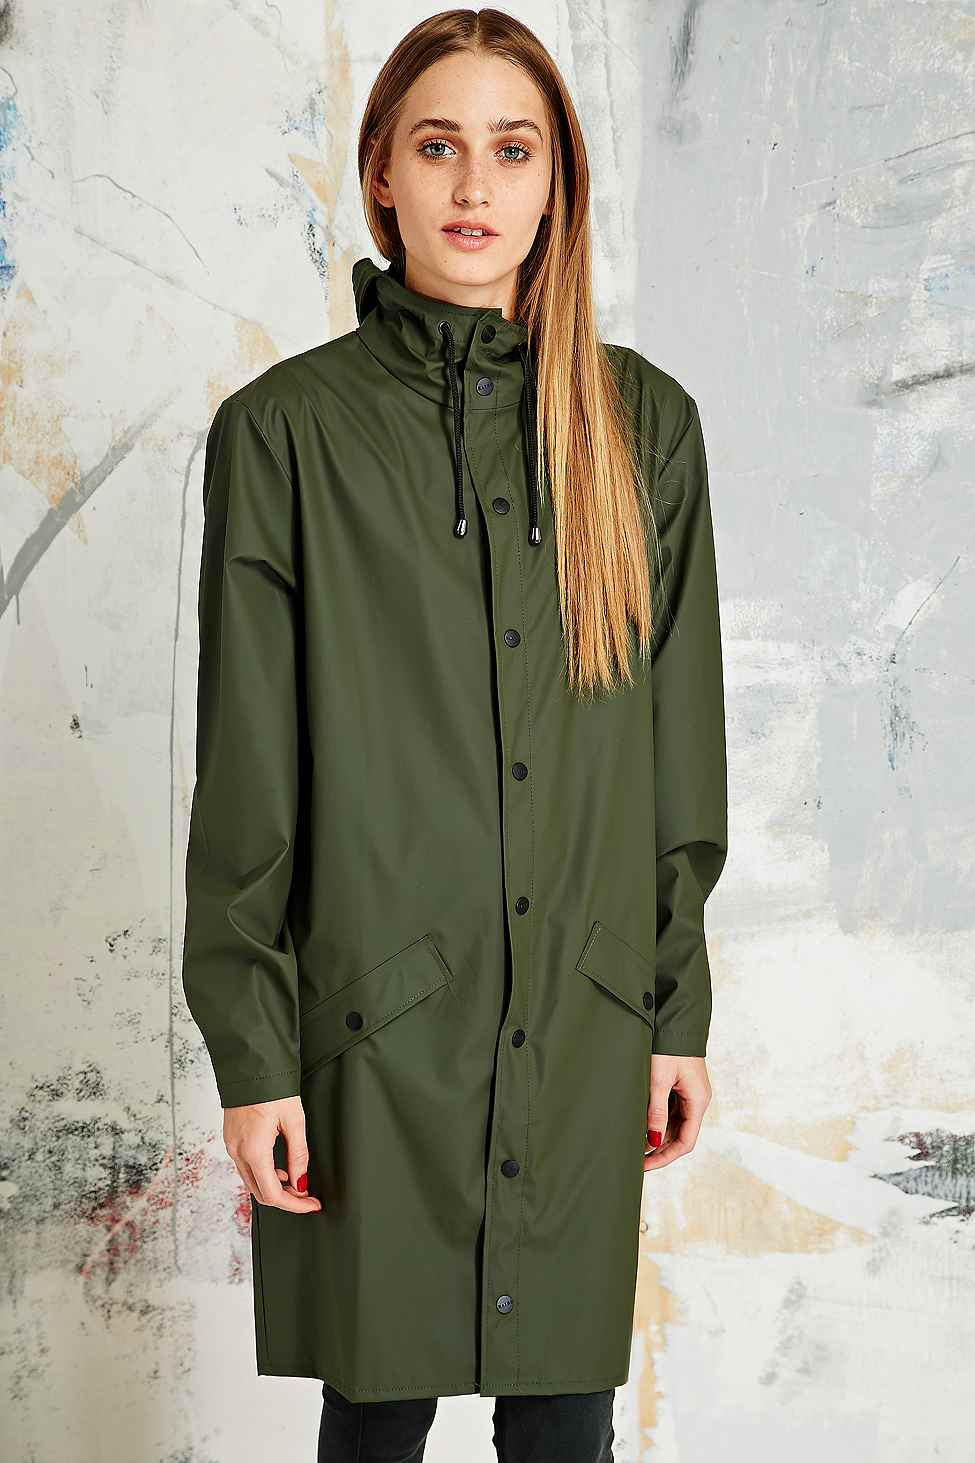 Rains Long Waterproof Jacket In Khaki in Natural for Men - Lyst